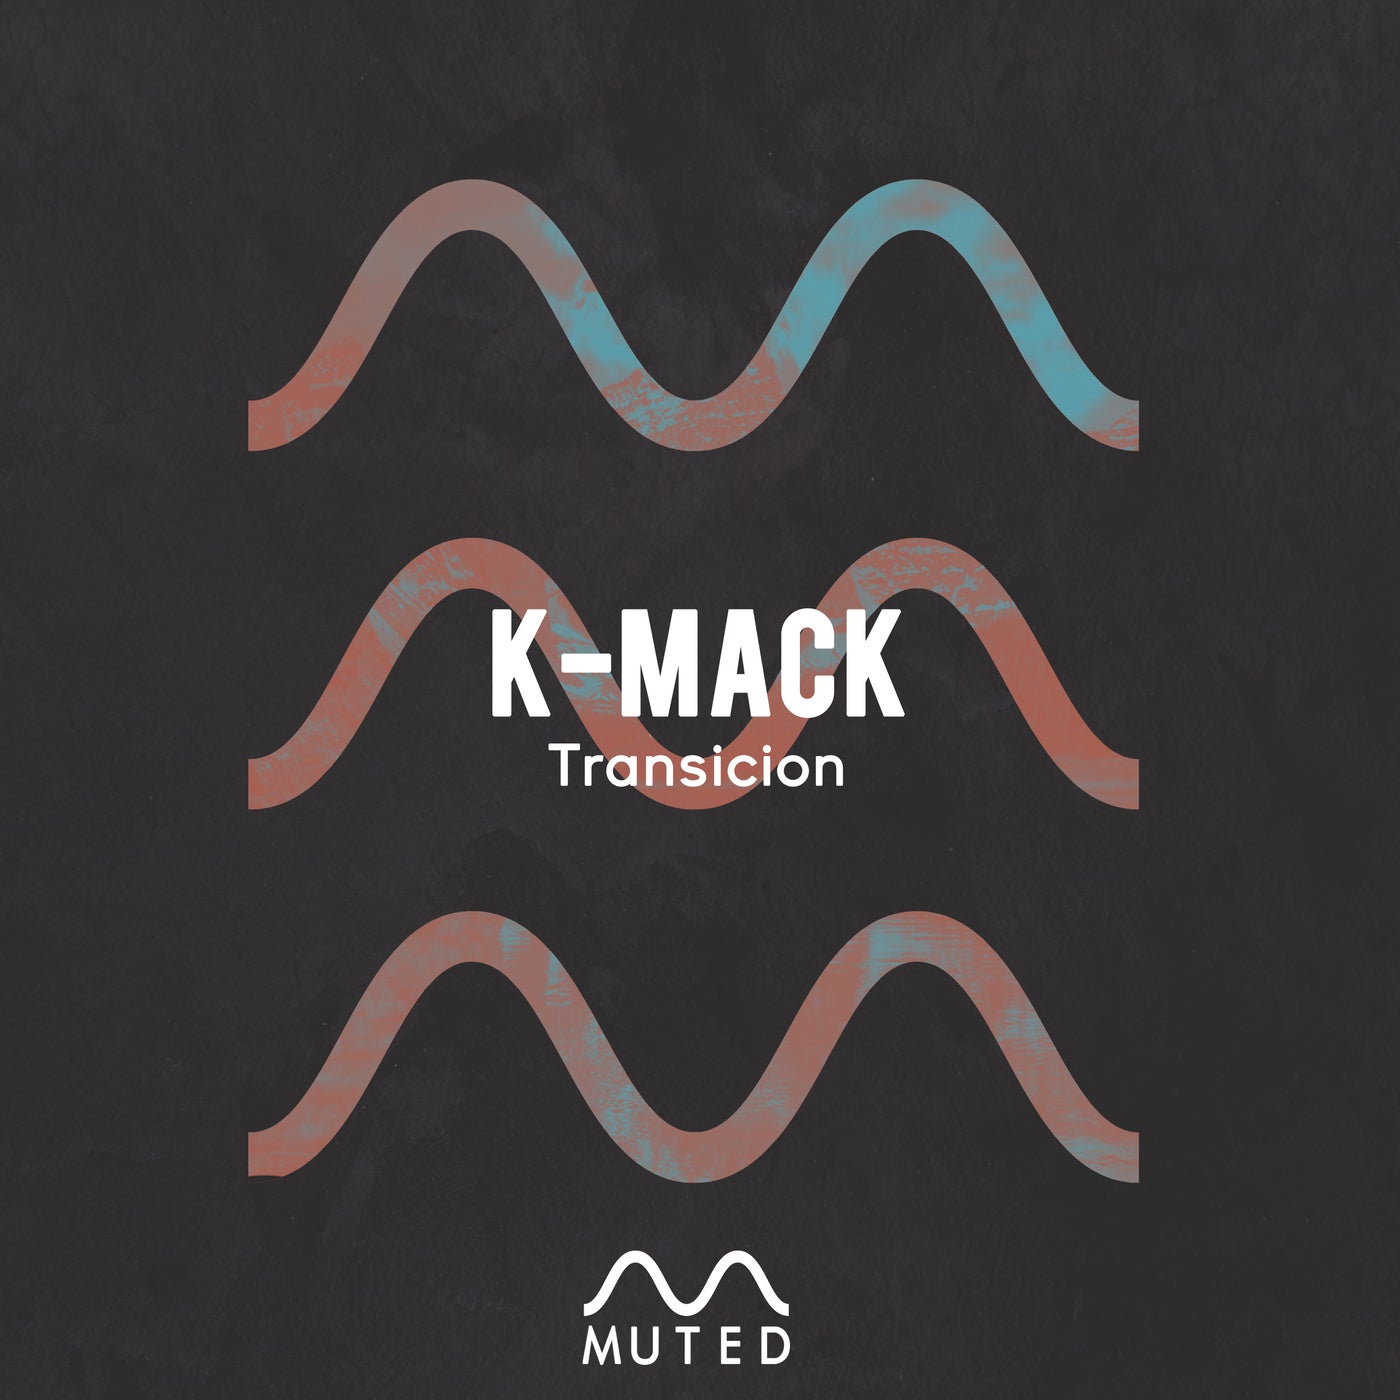 K-Mack - Transicion [Muted]